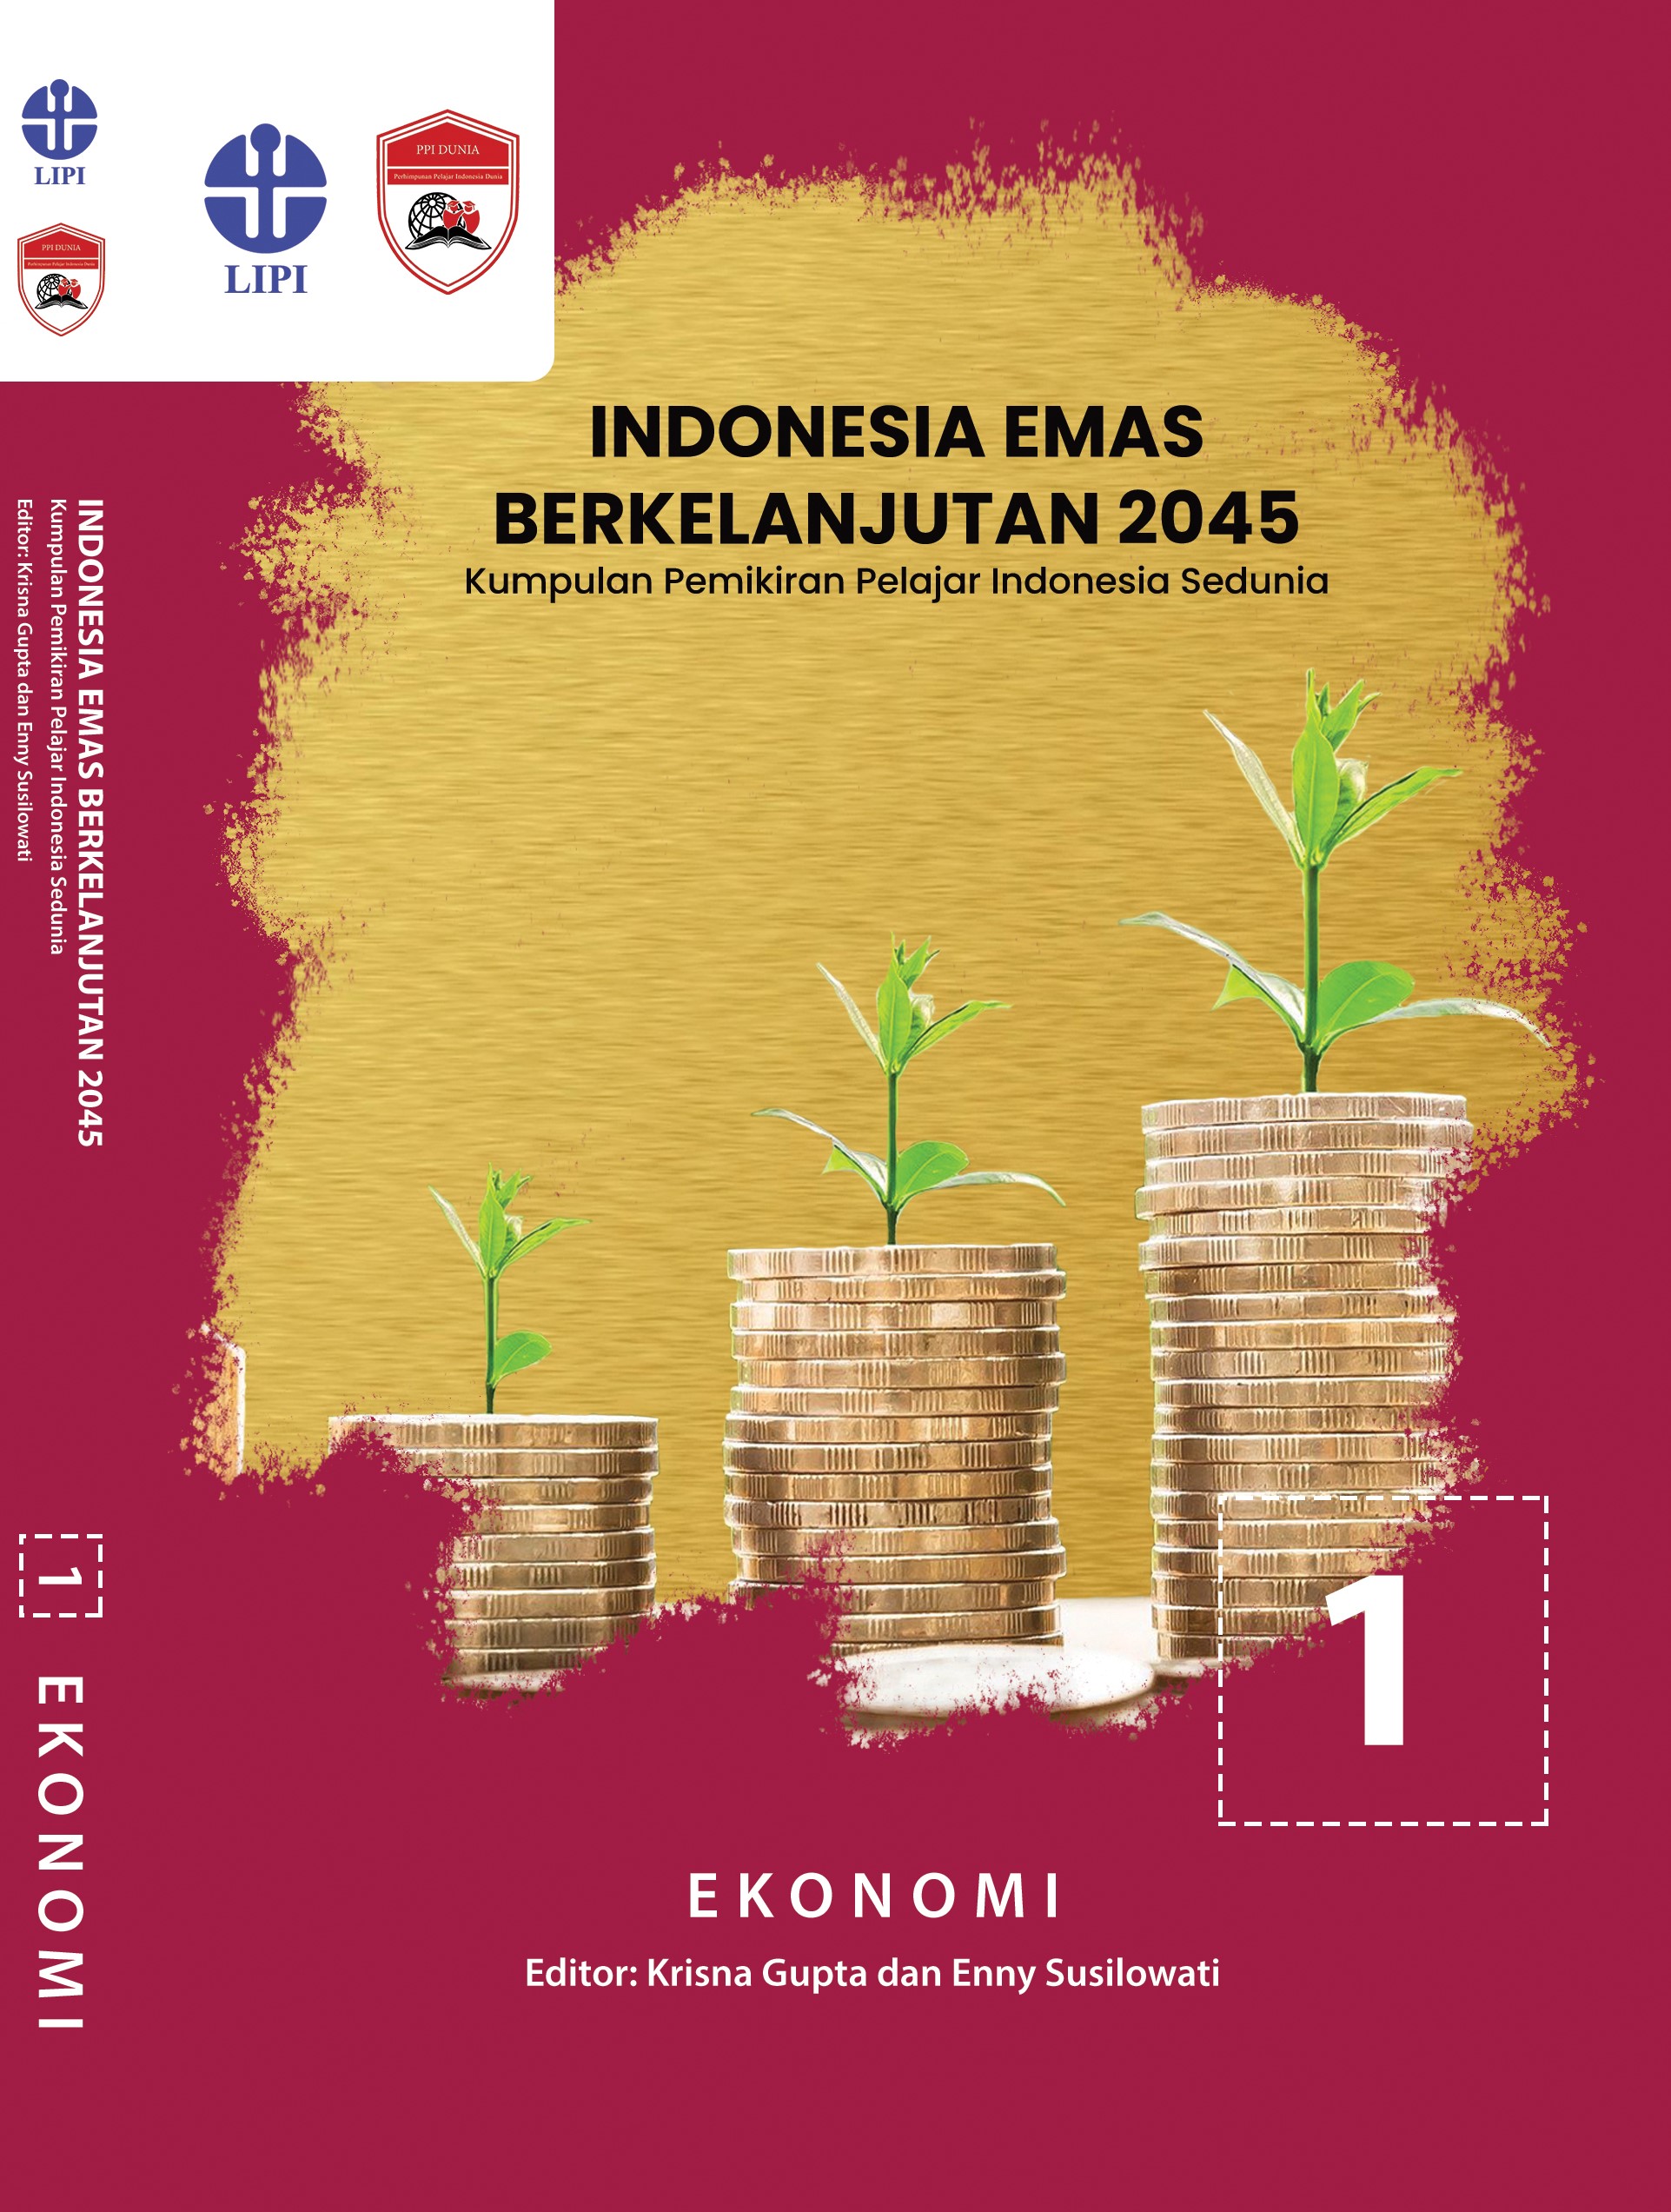 Indonesia emas berkelanjutan 2045 : kumpulan pemikiran pelajar Indonesia sedunia seri 1 ekonomi